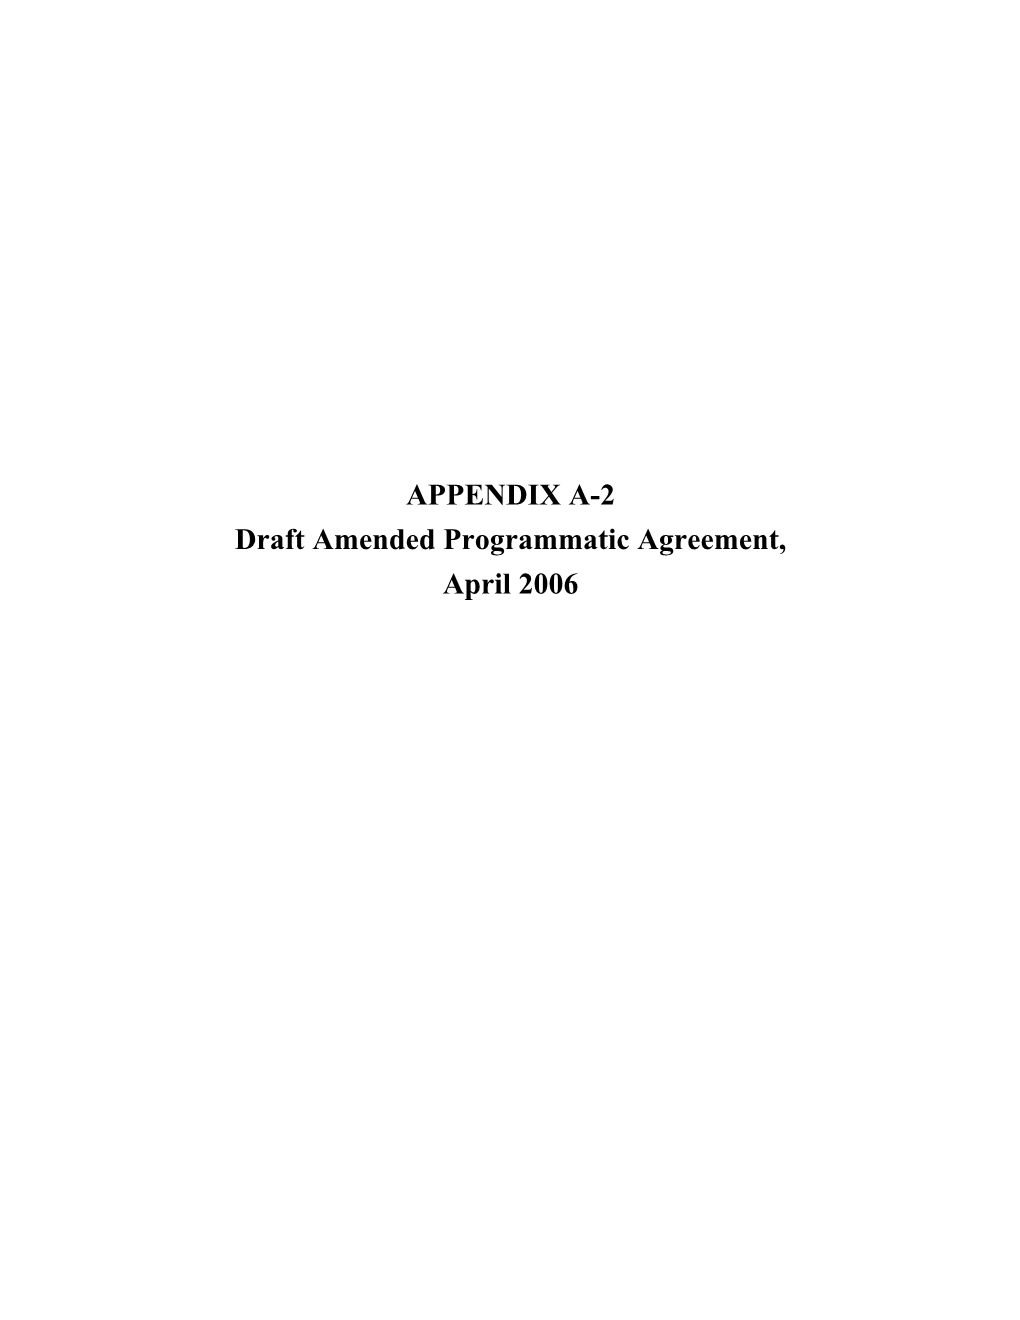 APPENDIX A-2 Draft Amended Programmatic Agreement, April 2006